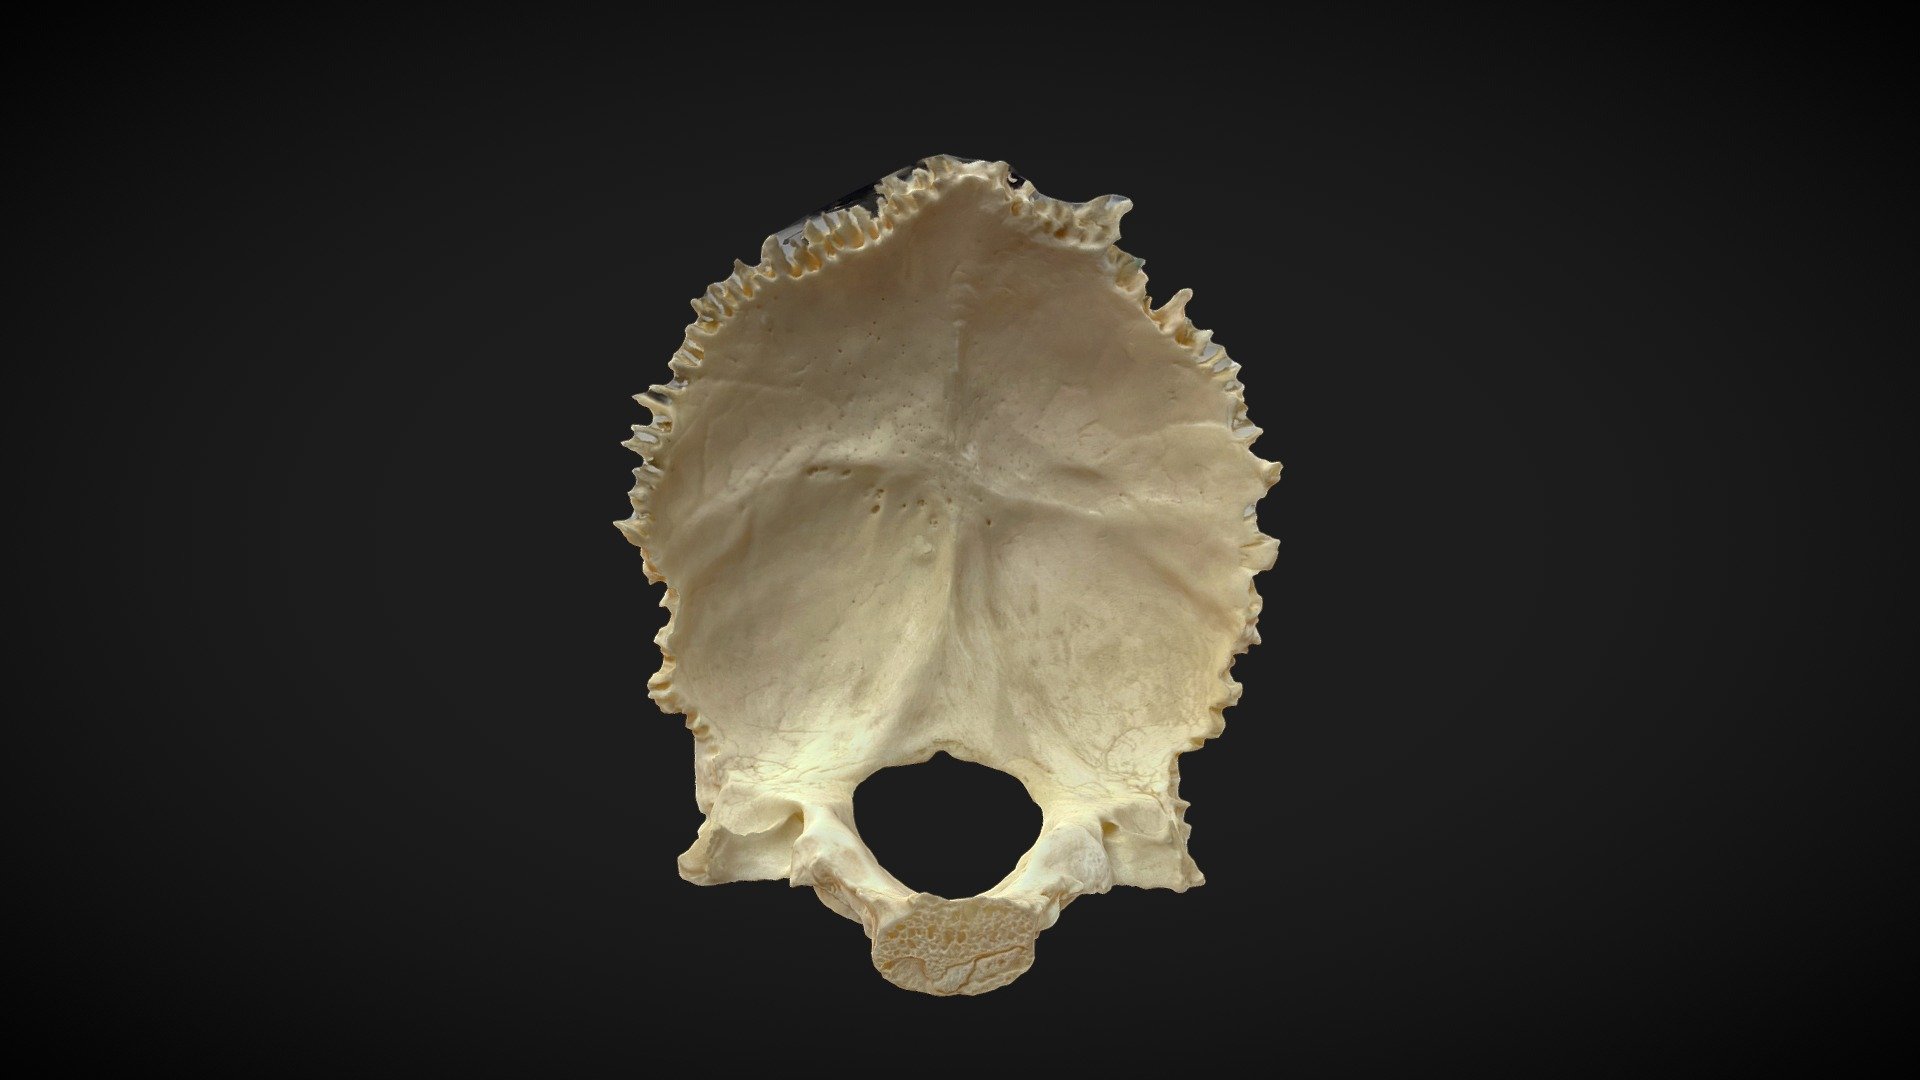 Occipital Bone 3d Model By 3d Atlas Of Neurological Surgery Tspiriev Dff9e44 Sketchfab 6363